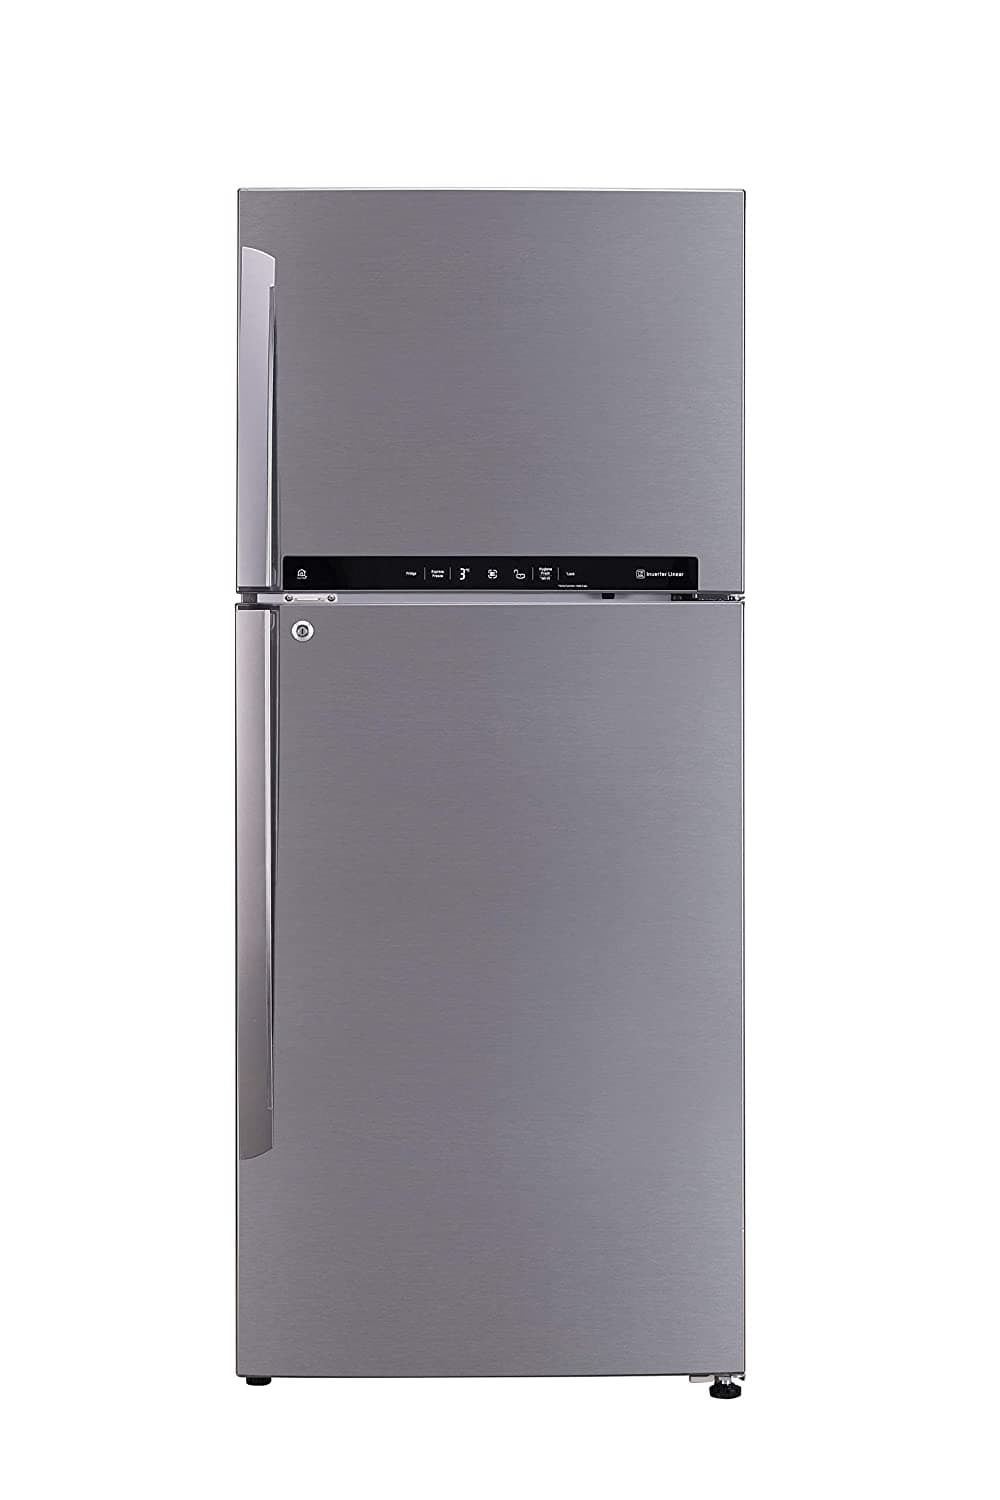 LG GL-T432FPZU 437 Ltr Double Door Refrigerator